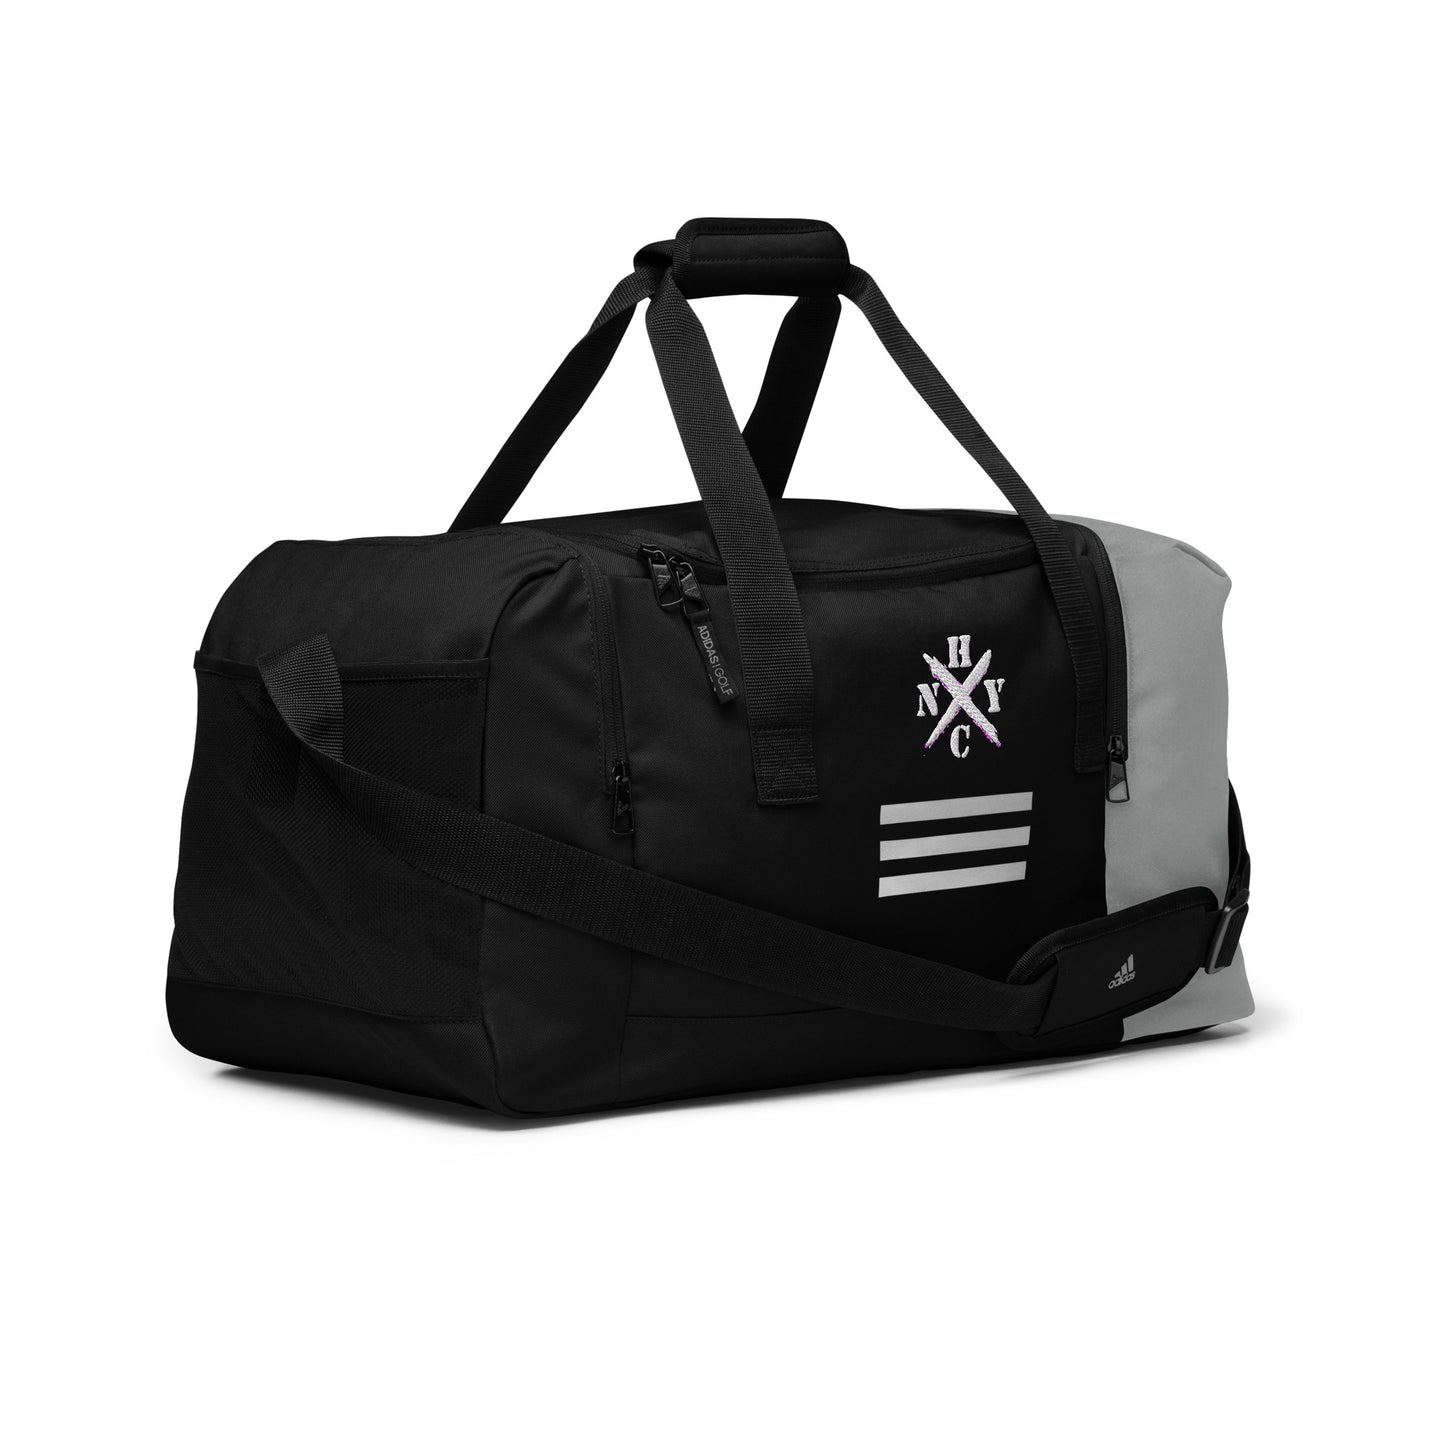 NYHC Adidas Duffle Bag